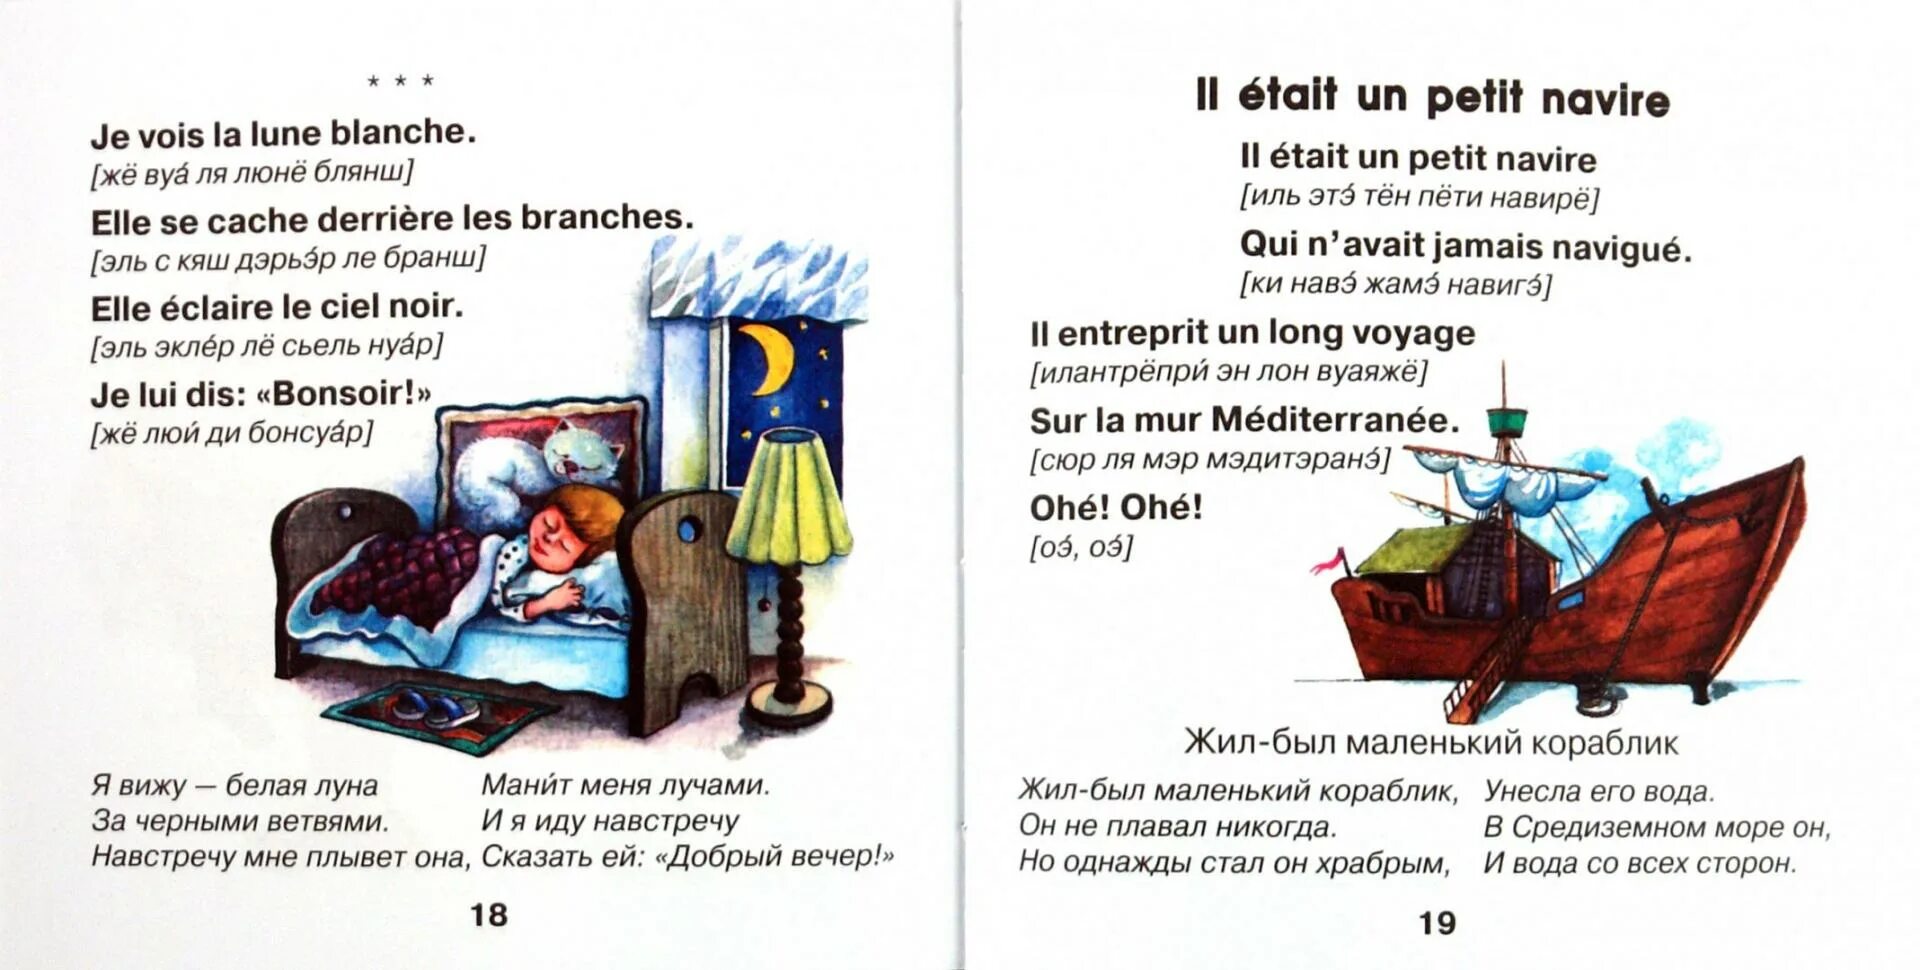 Стихи на французском. Детские стихи на французском языке. Французский детский стик. Стишки для детей на французском языке. Стихотворение француза